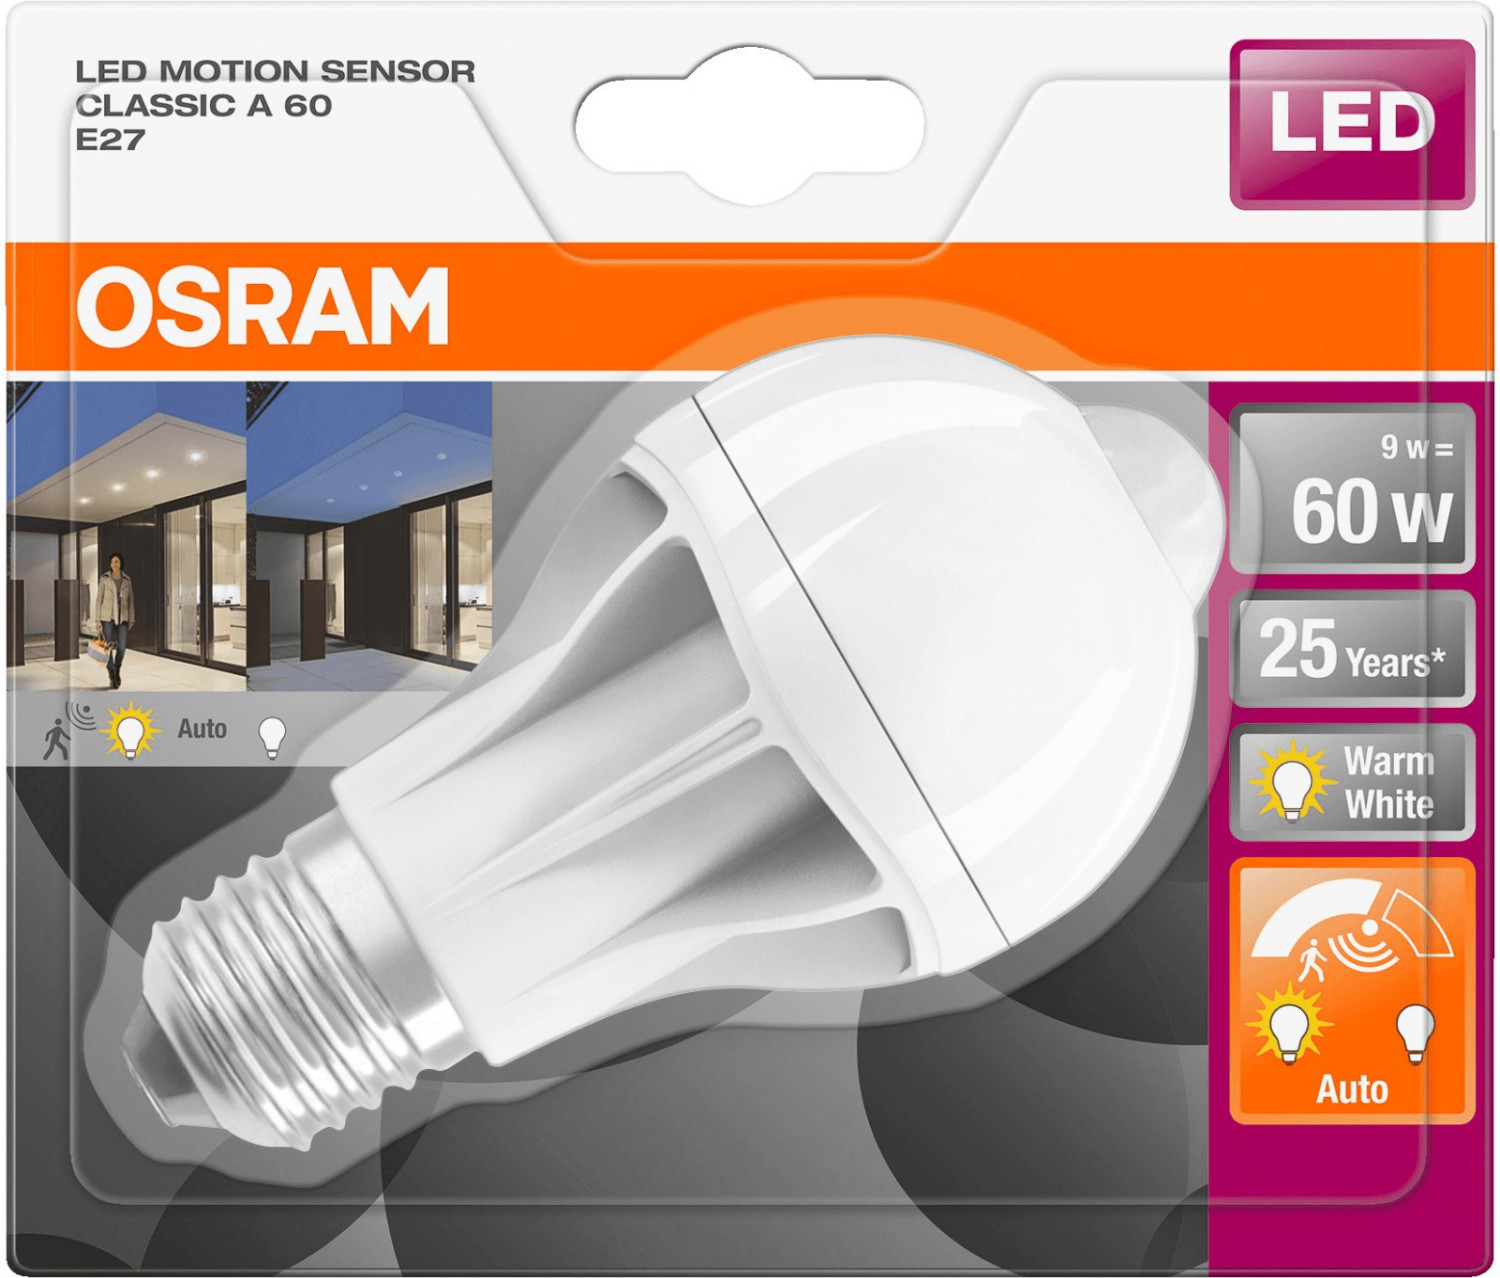 OSRAM LED STAR MOTION SENSOR CLASSIC A LED-Speziallampen mit Bewegungs